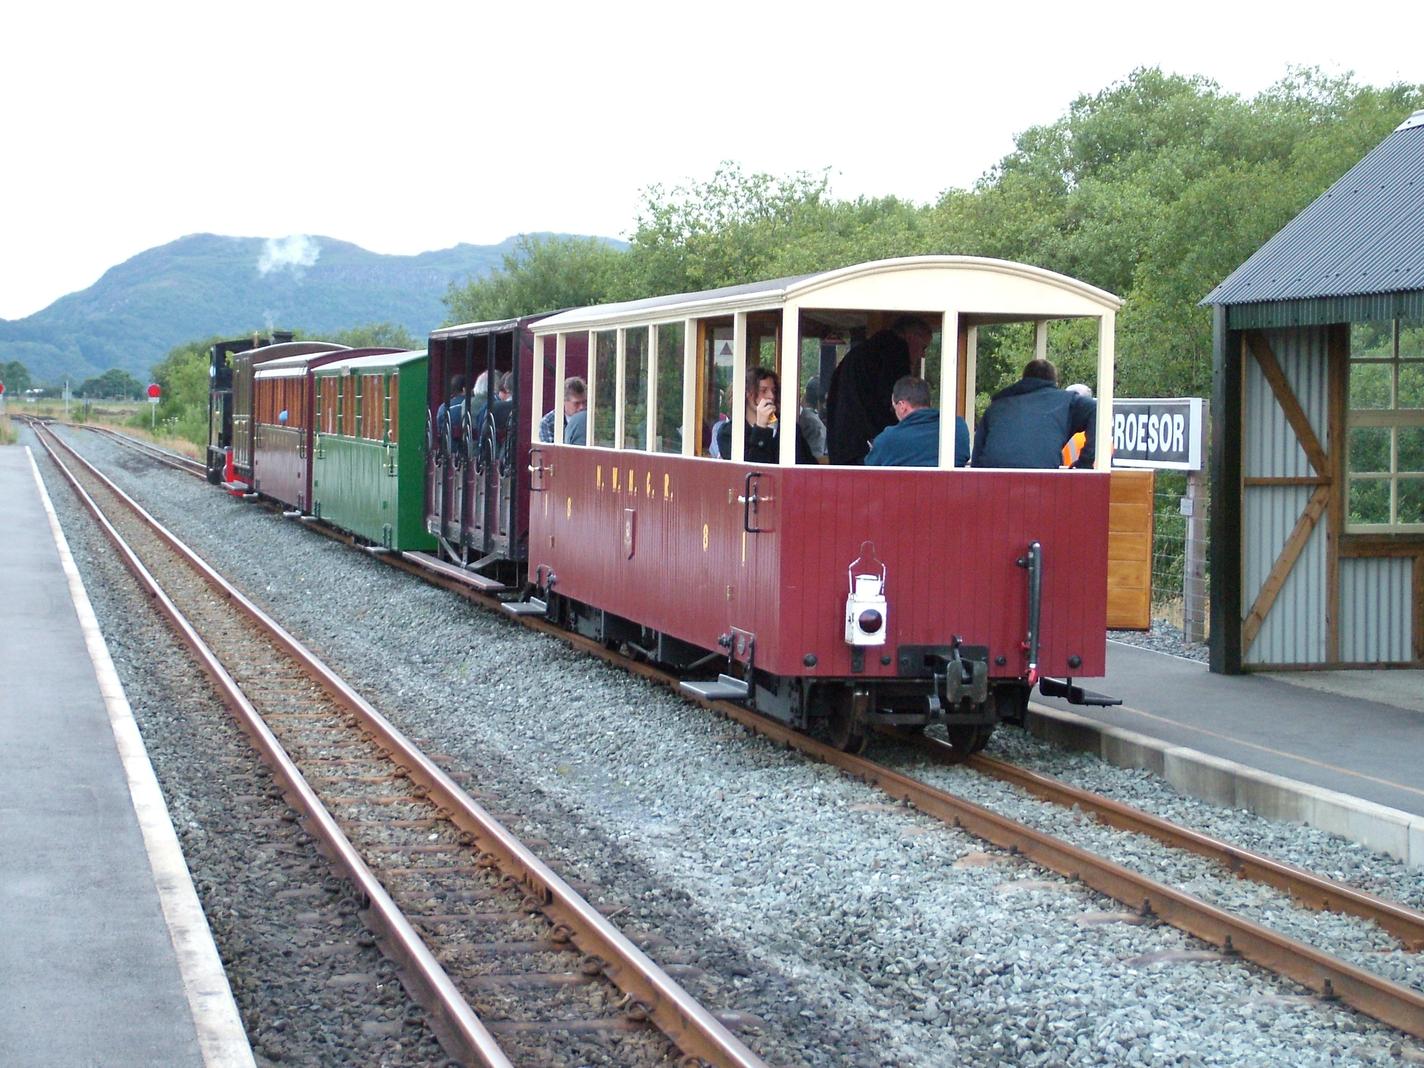 The excursion train at Pont Croesor halt